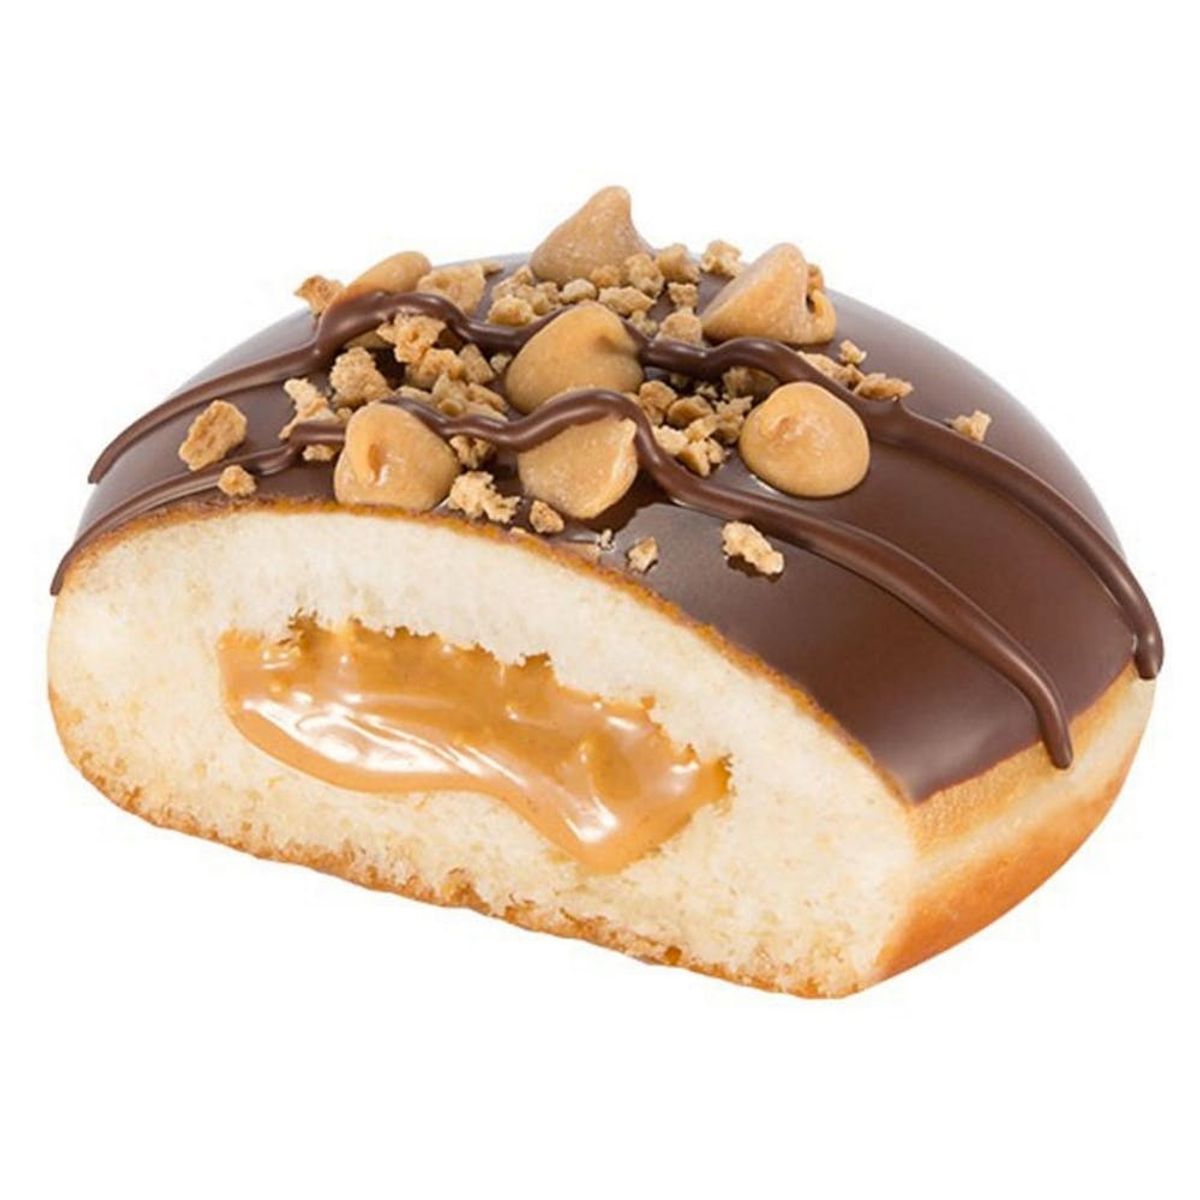 The Internet Is Going Crazy Over Krispy Kreme’s New Donut Flavor